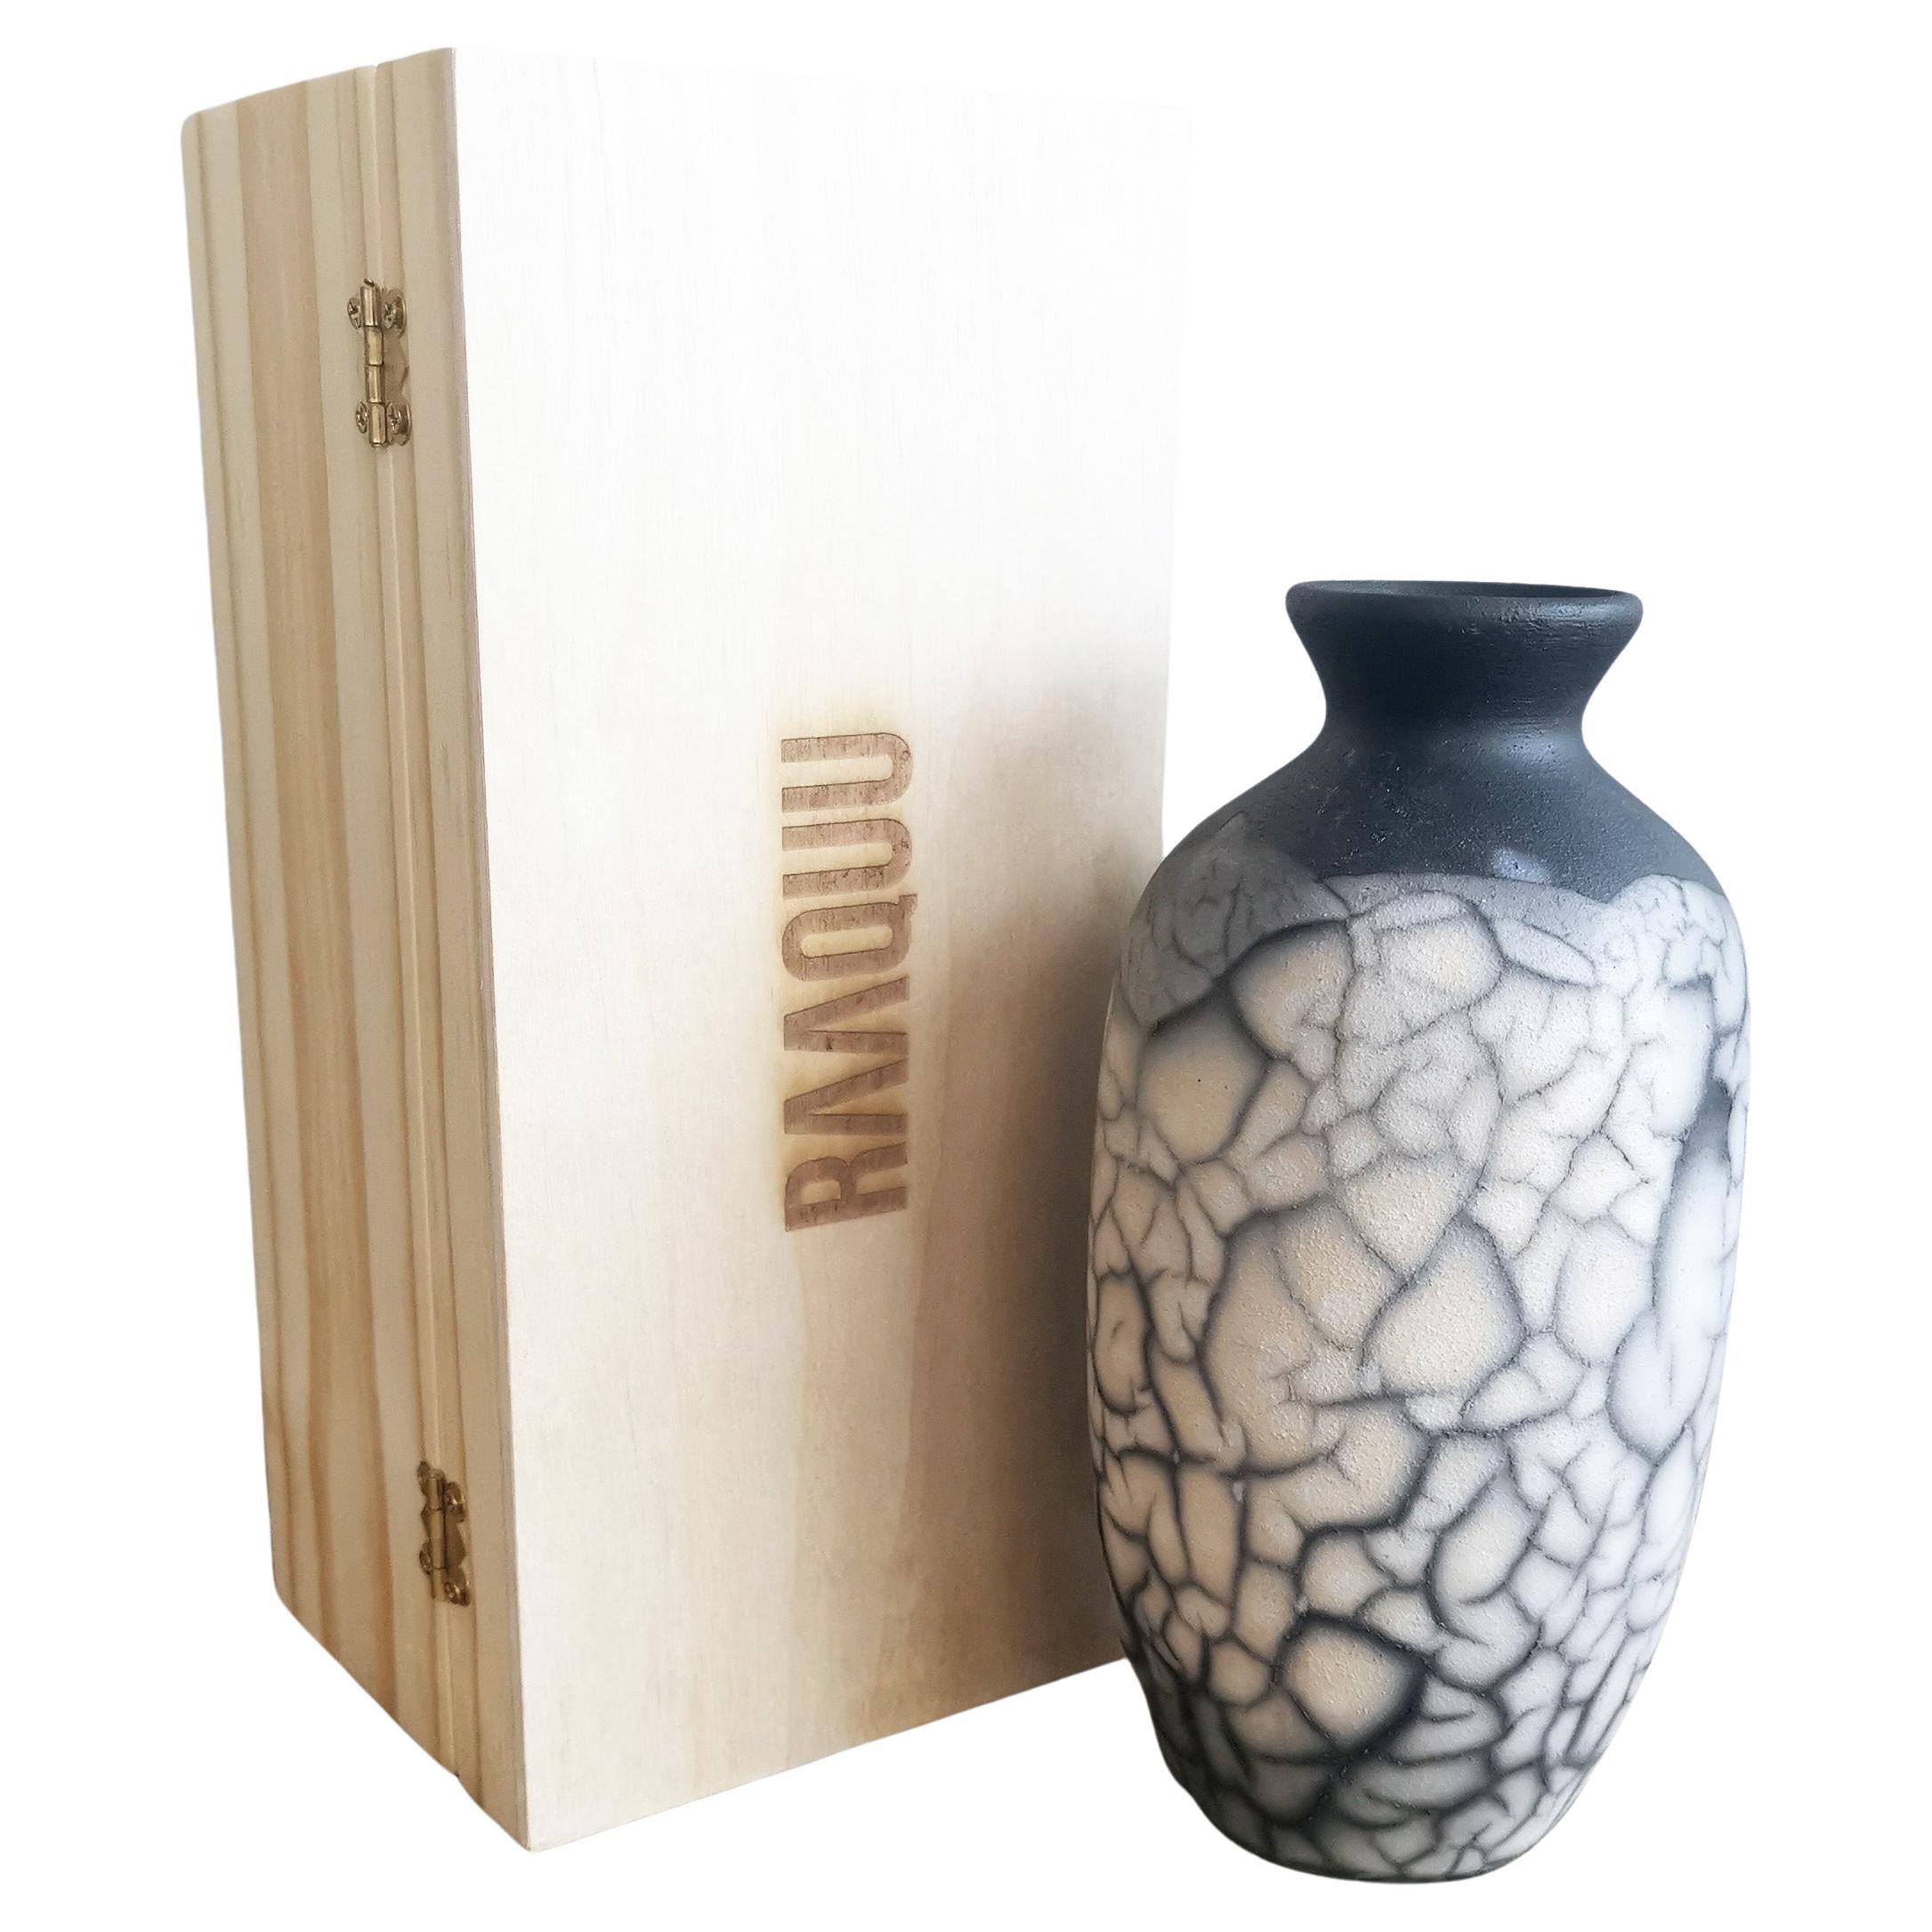 Koban Raku Pottery Vase with Gift Box - Smoked Raku - Handmade Ceramic